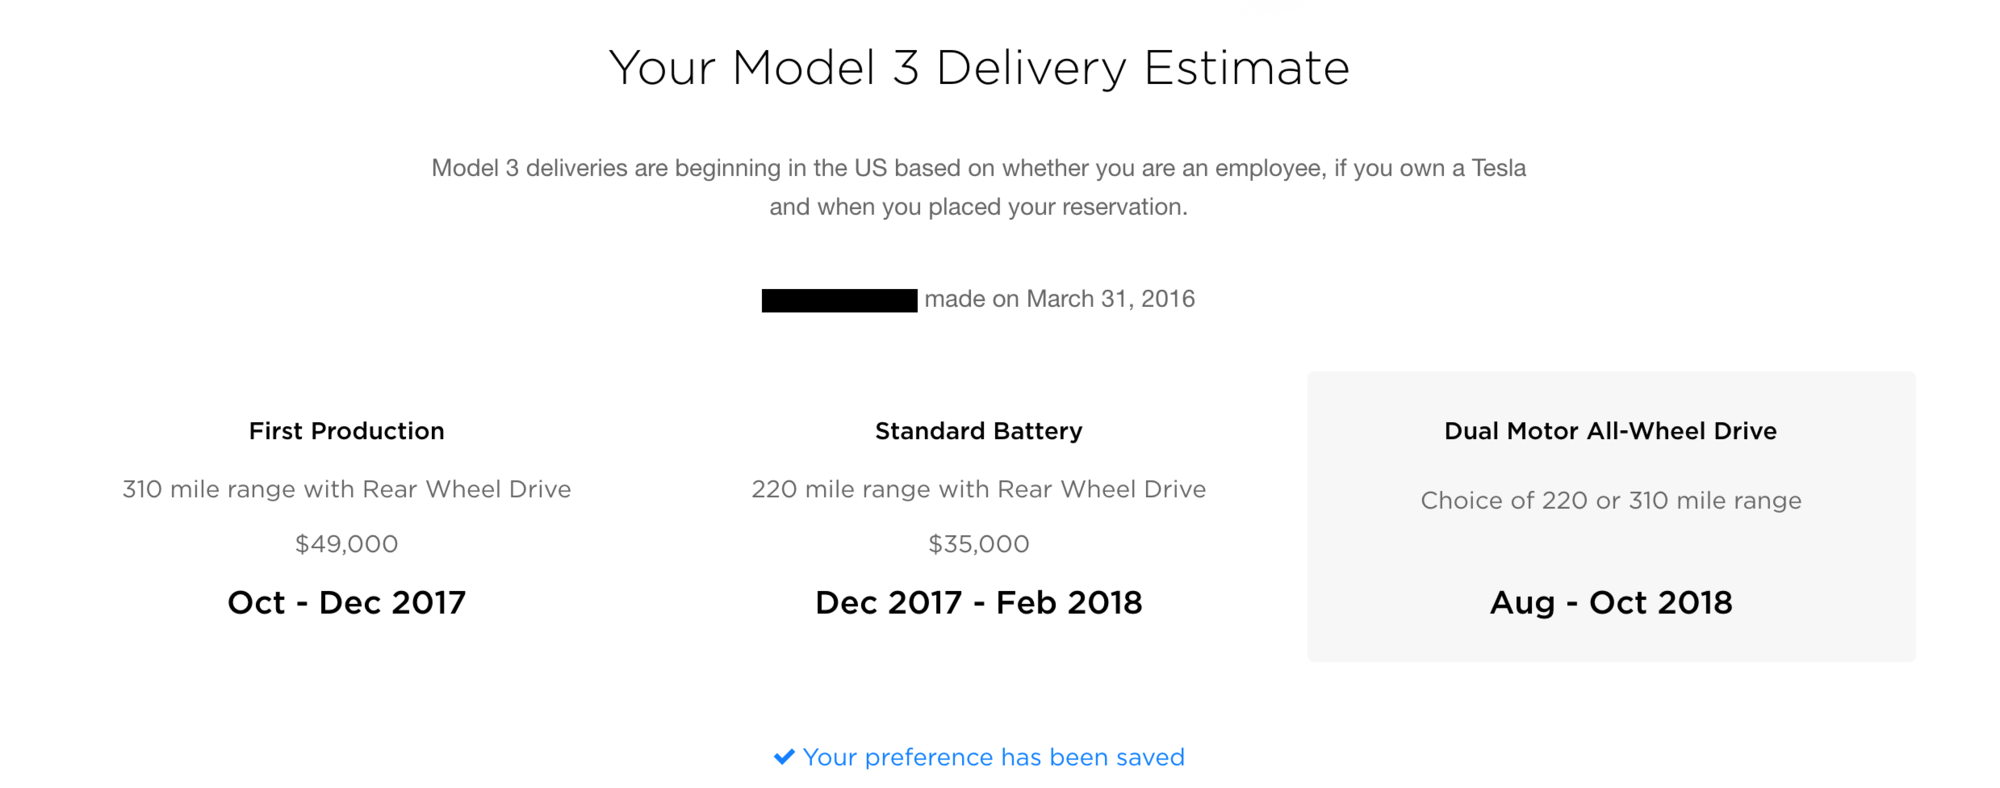 Model 3 Delivery Estimate 7-29-2017.png